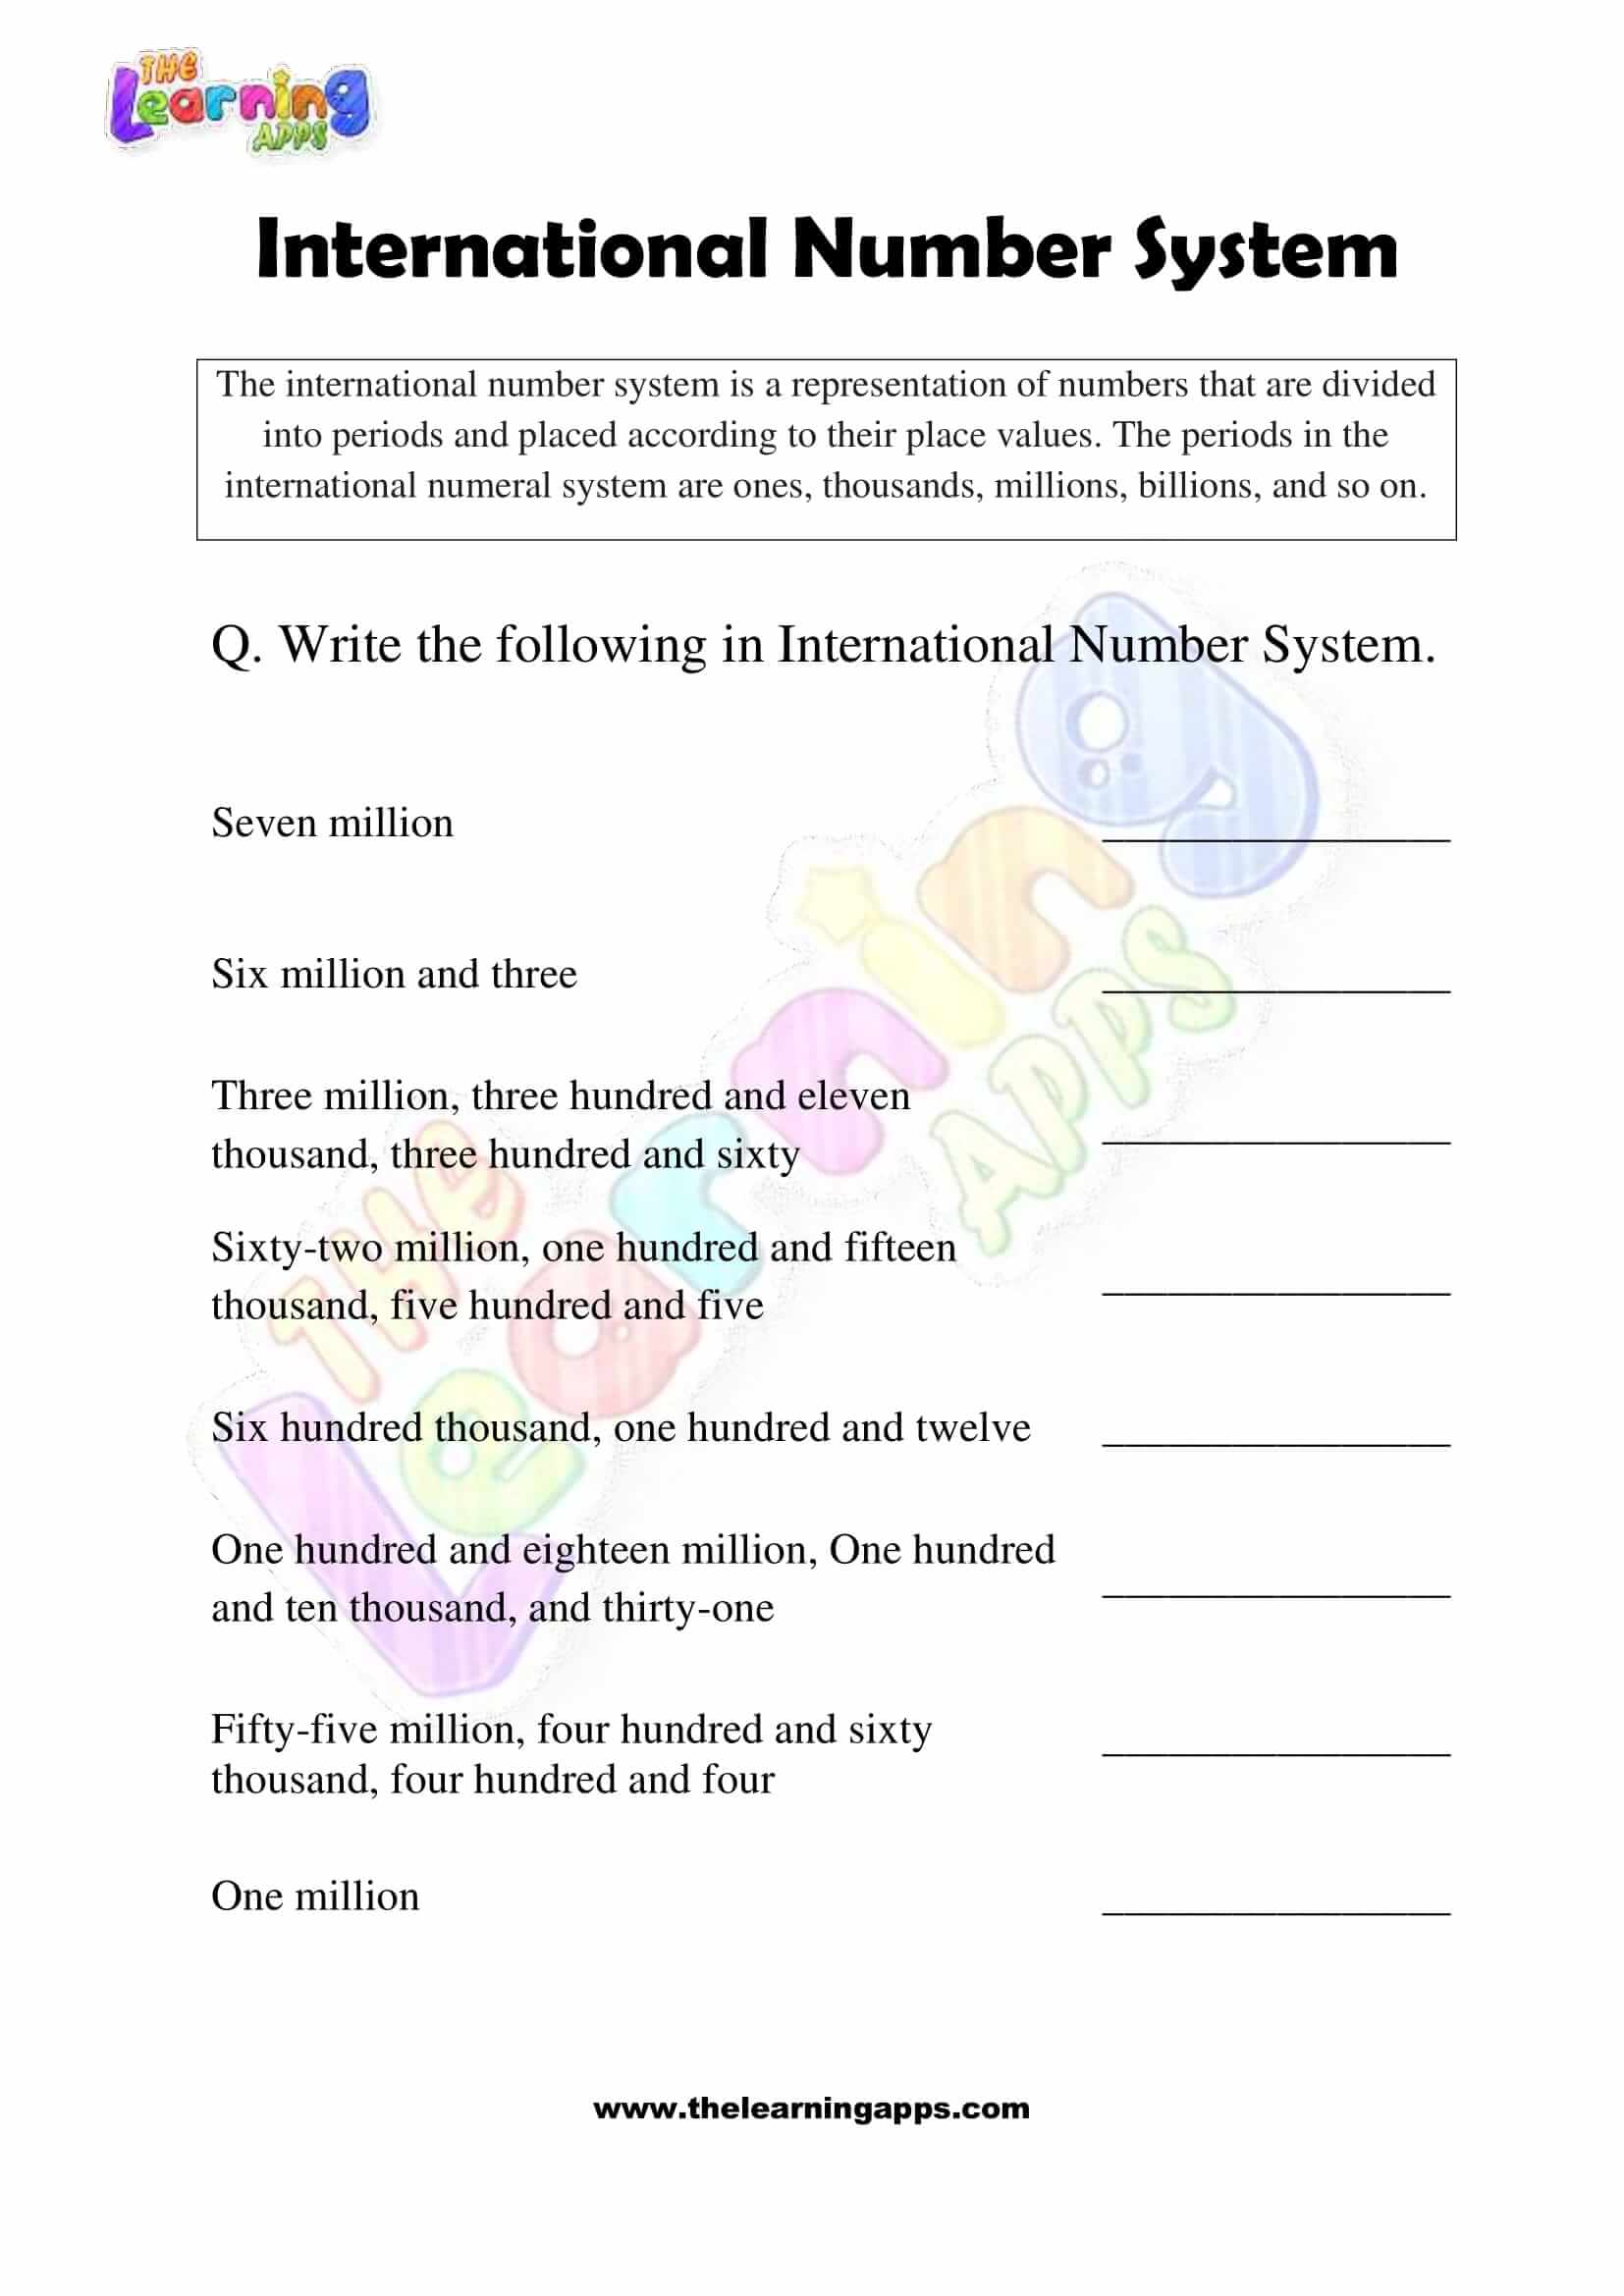 International Number System - Grade 3 - Activity 6